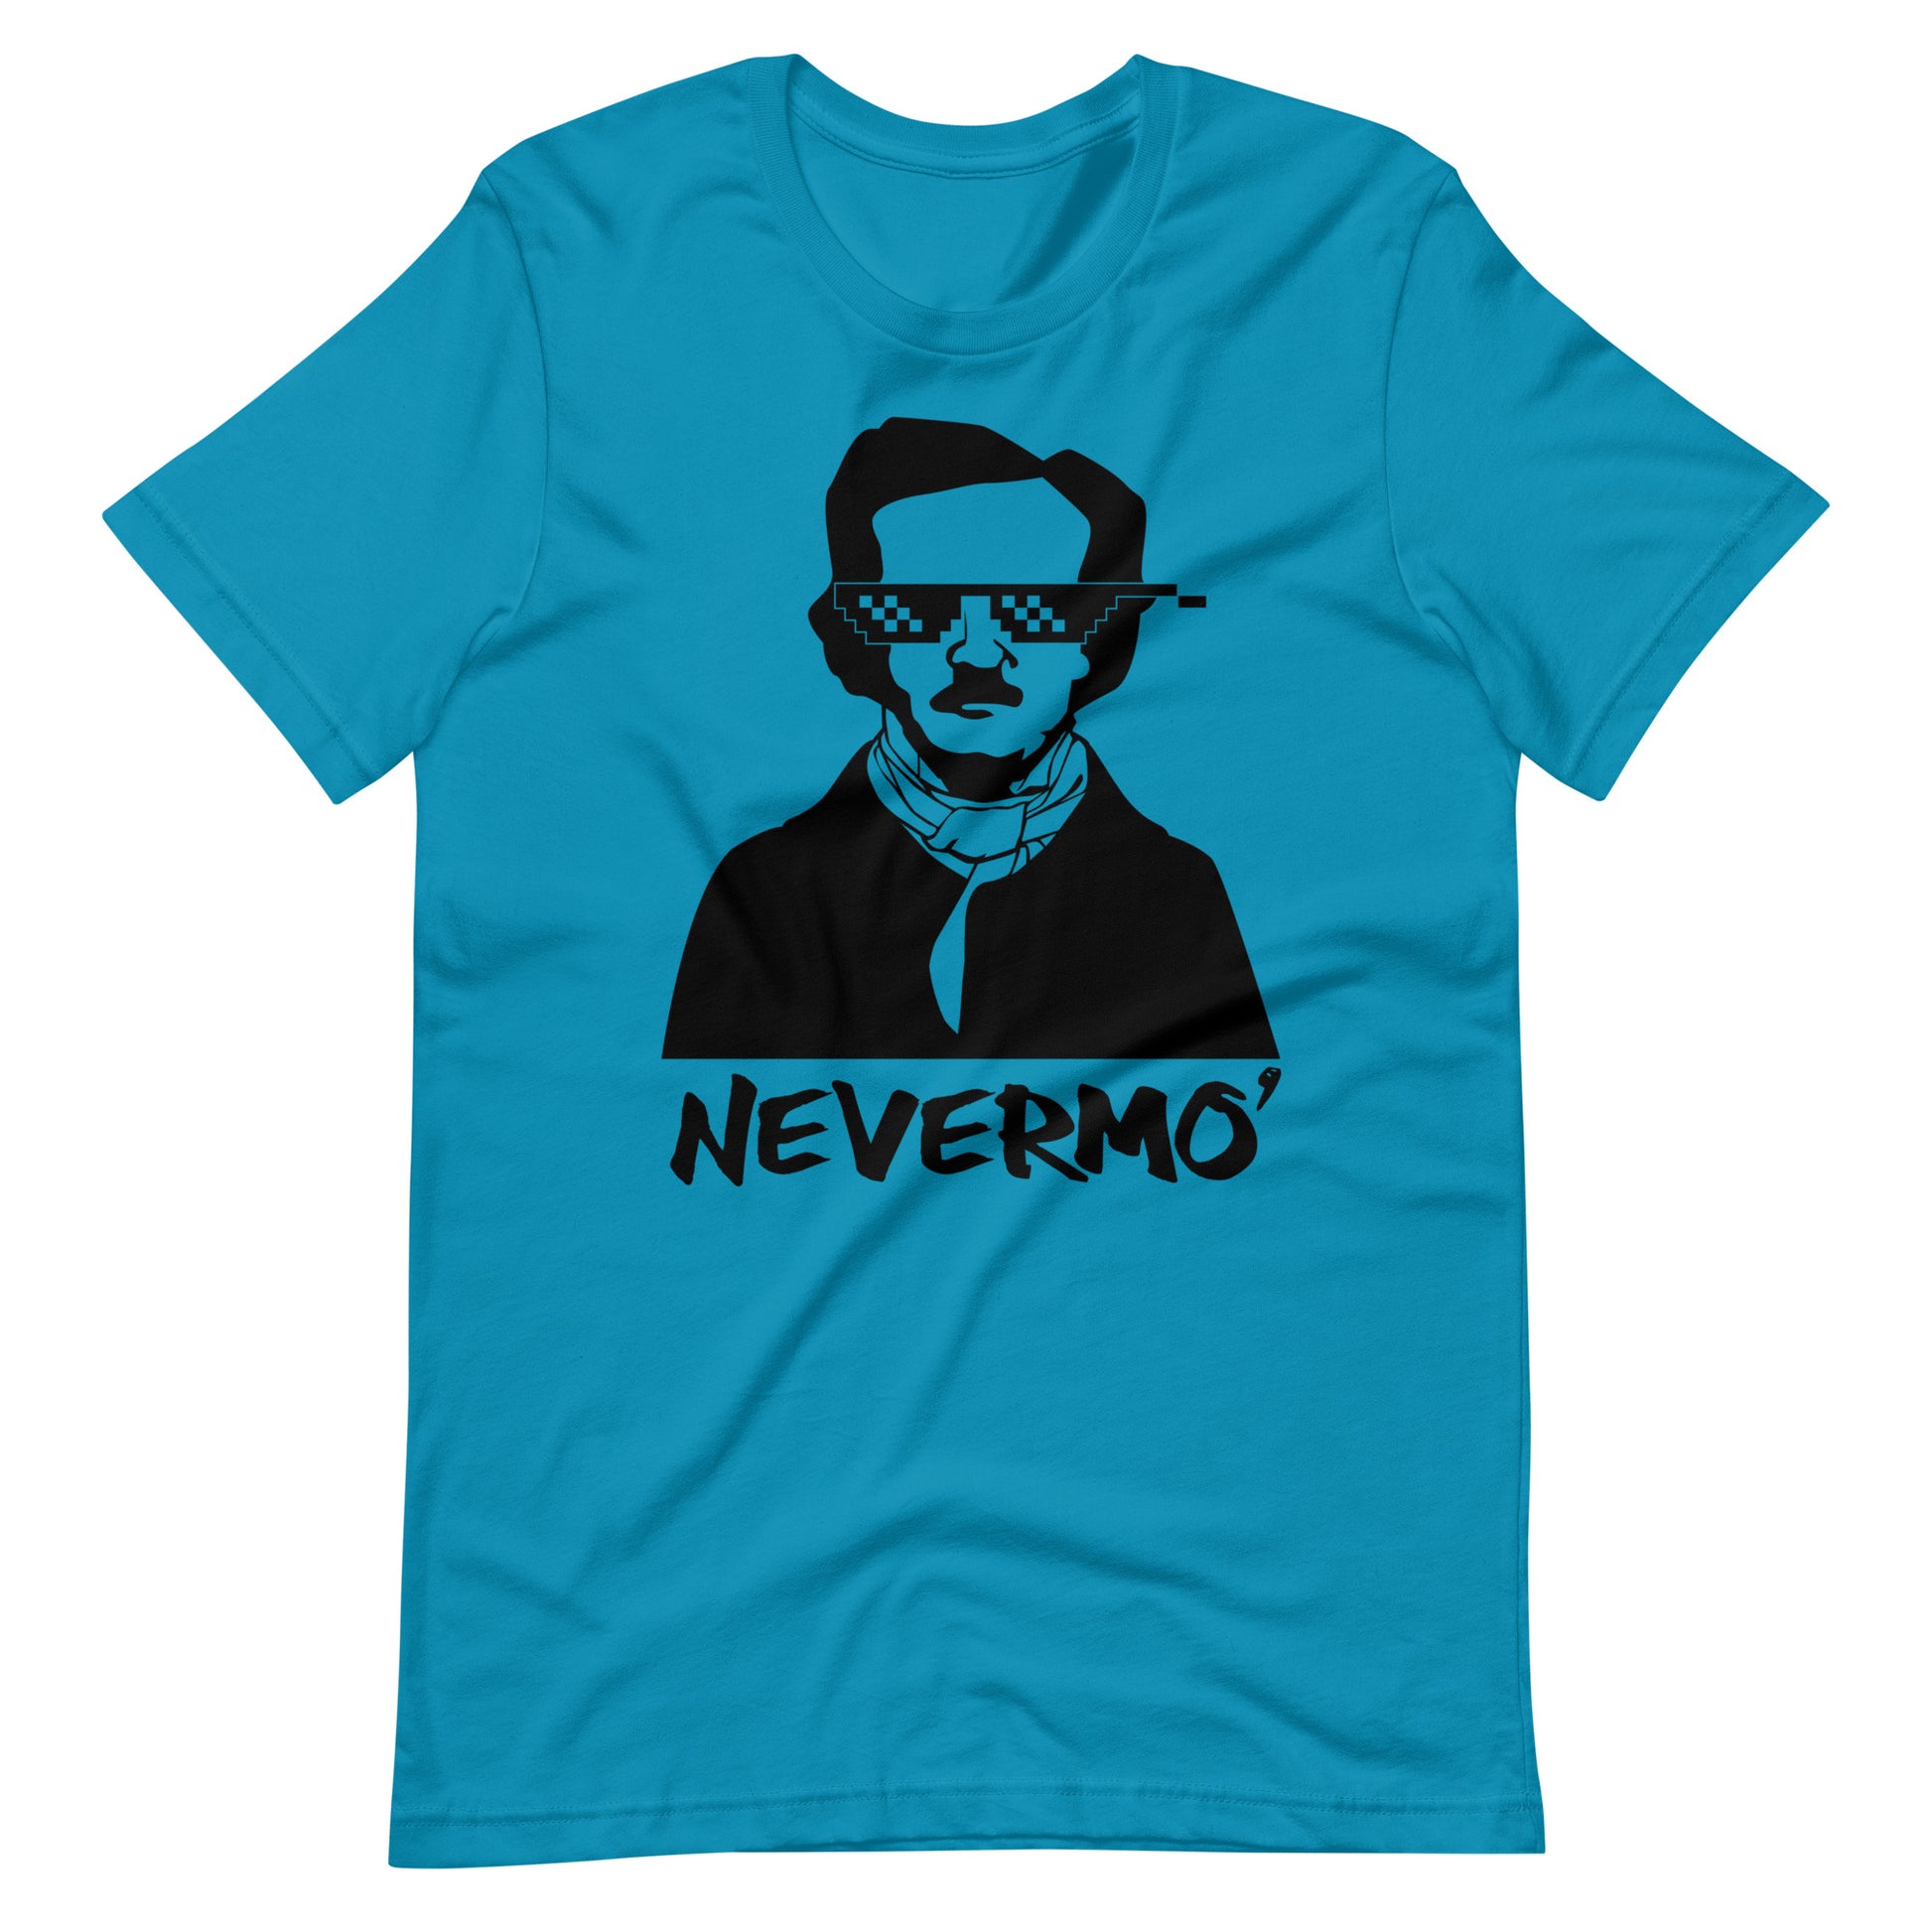 Men's Edgar Allan Poe "The Nevermo" T-Shirt - Aqua Front